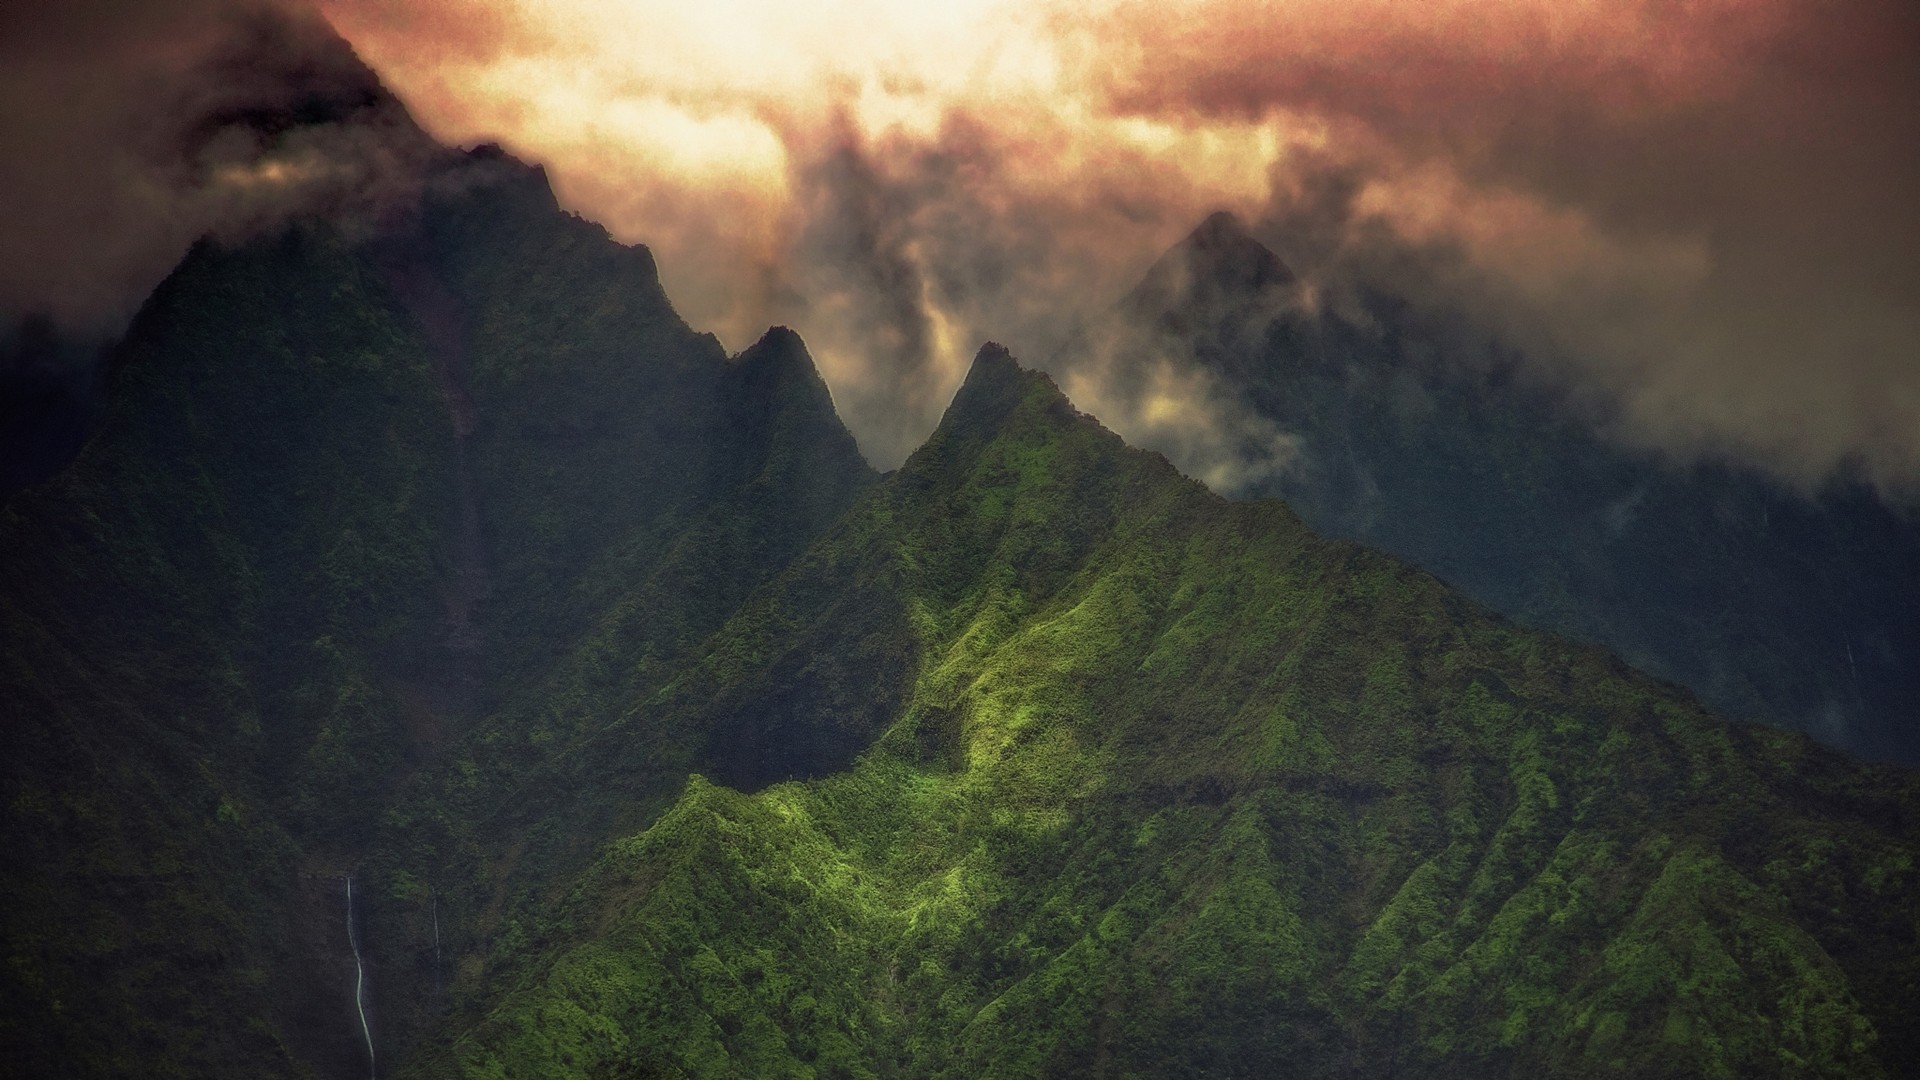 General 1920x1080 landscape nature clouds mountains creeks green Kauai summit